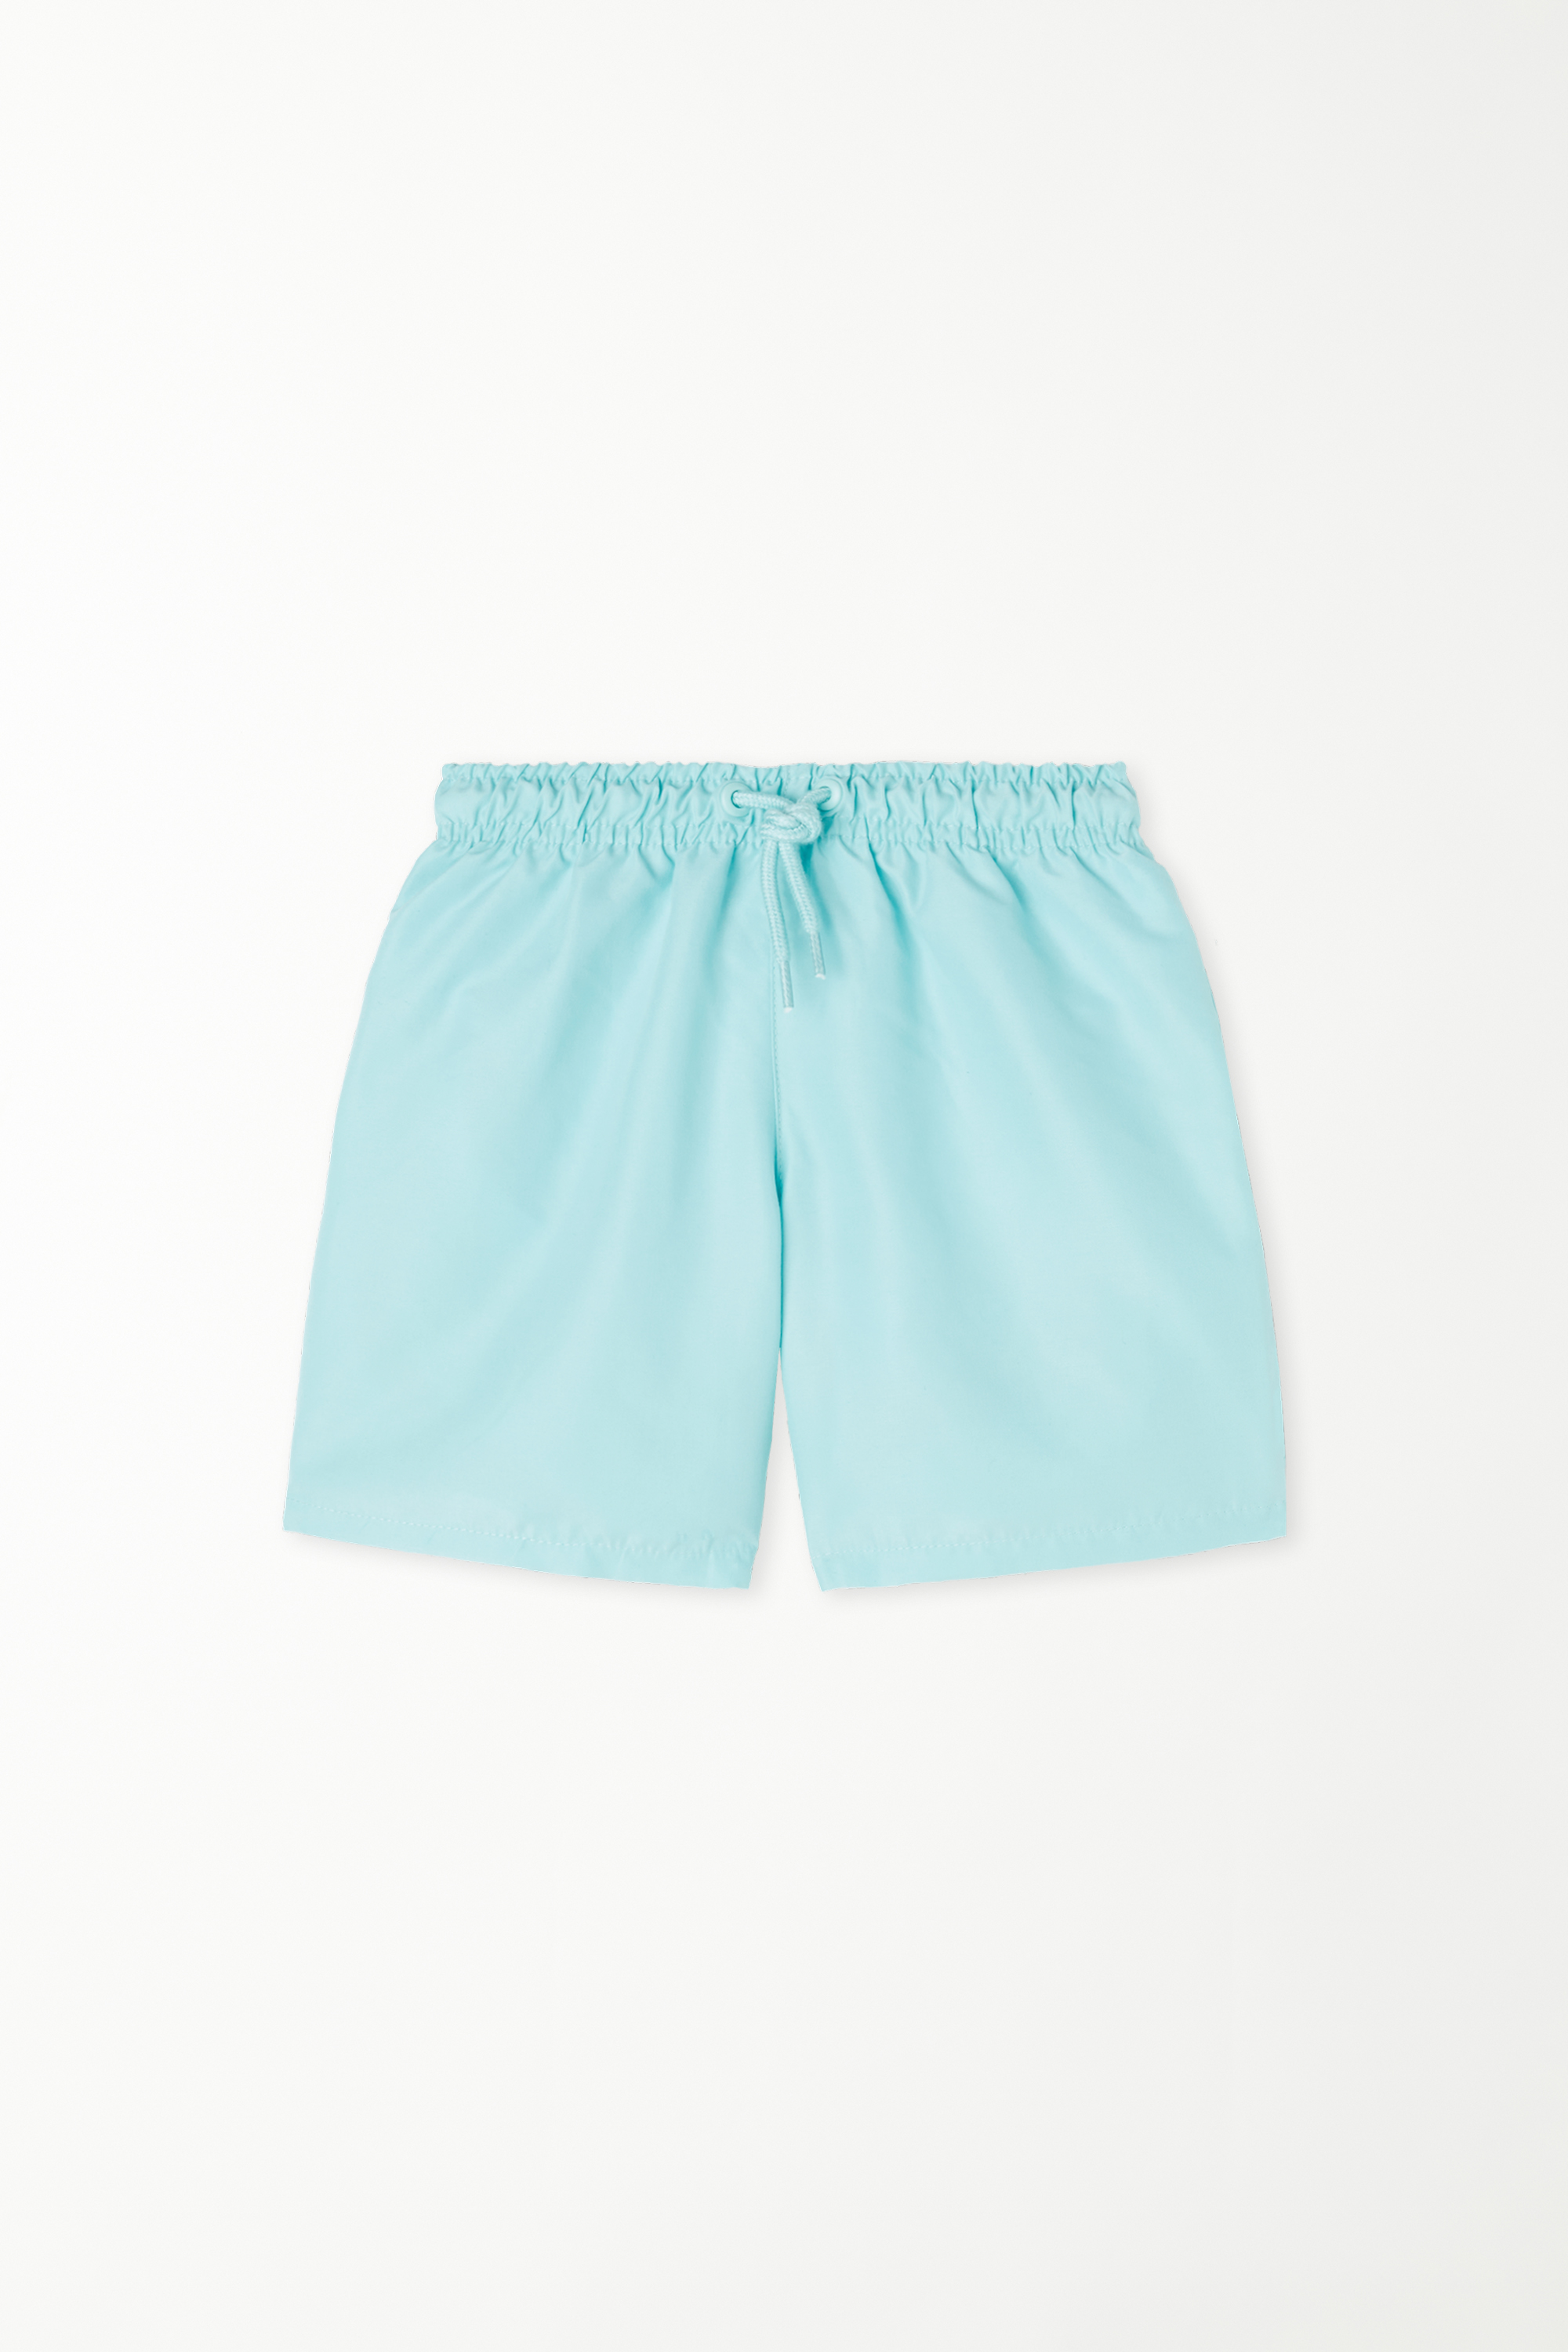 Boys’ Colour Change Swimming Shorts